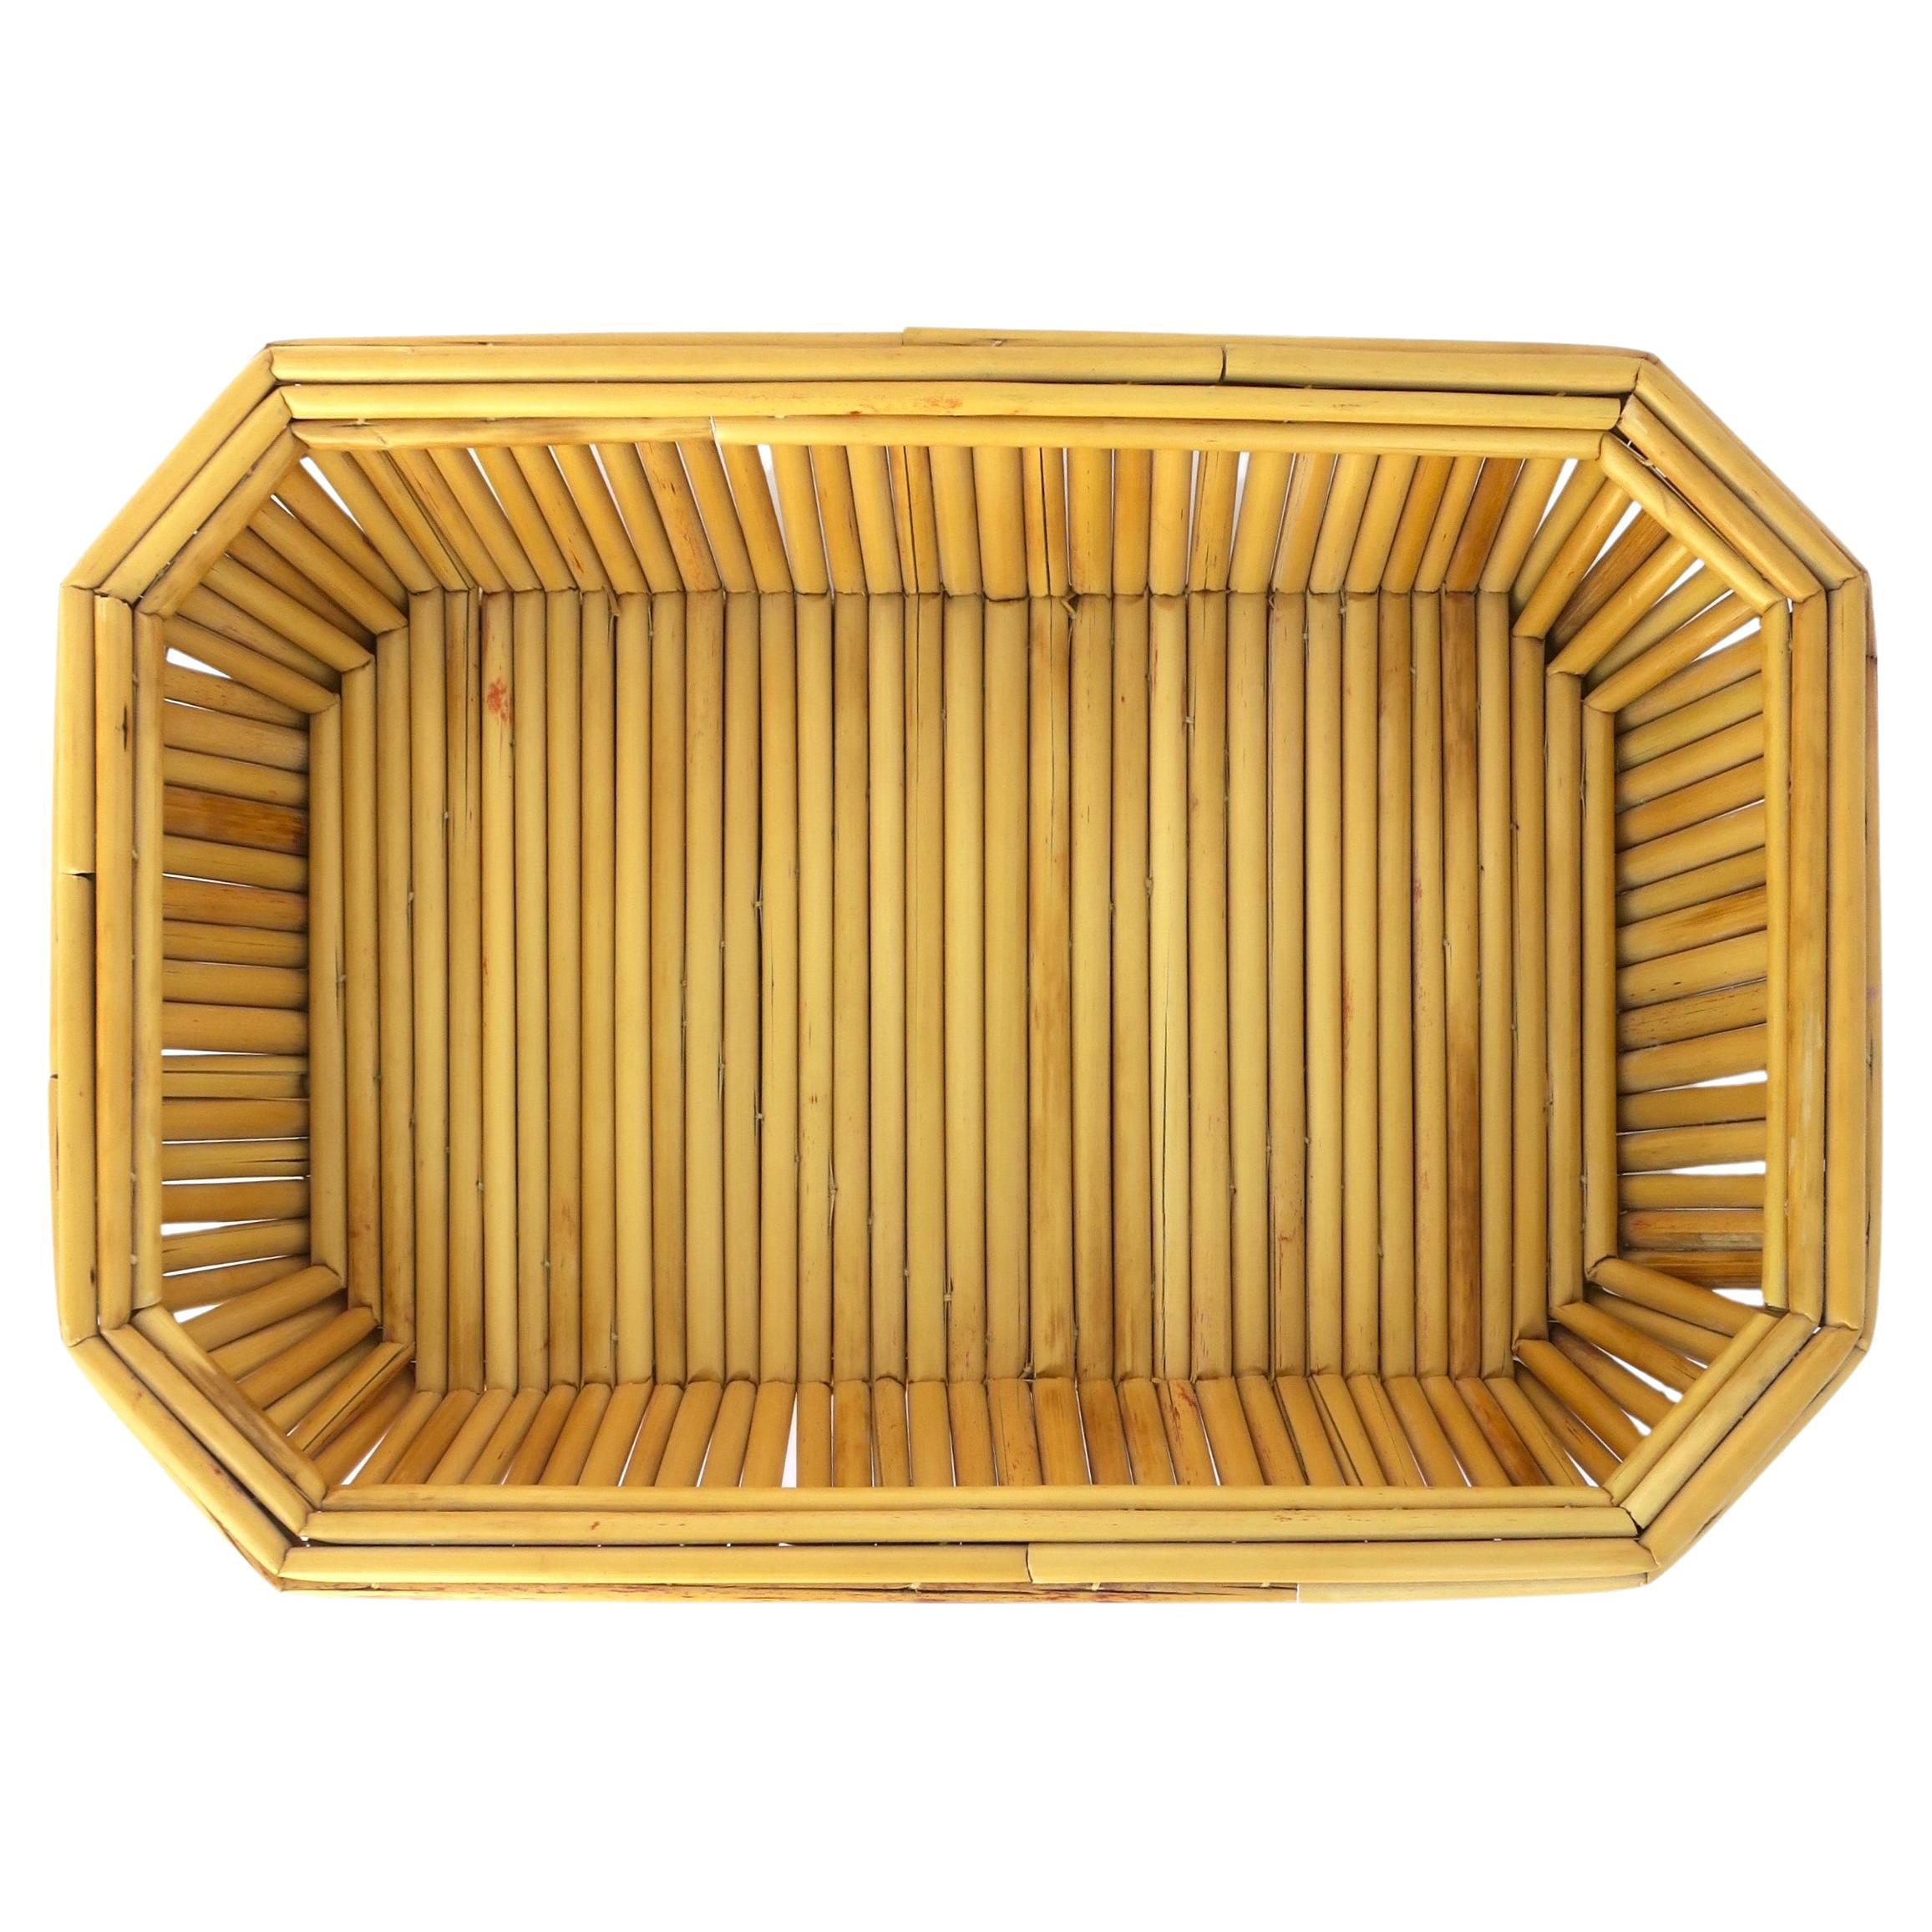 Wicker Tray Basket Centerpiece For Sale